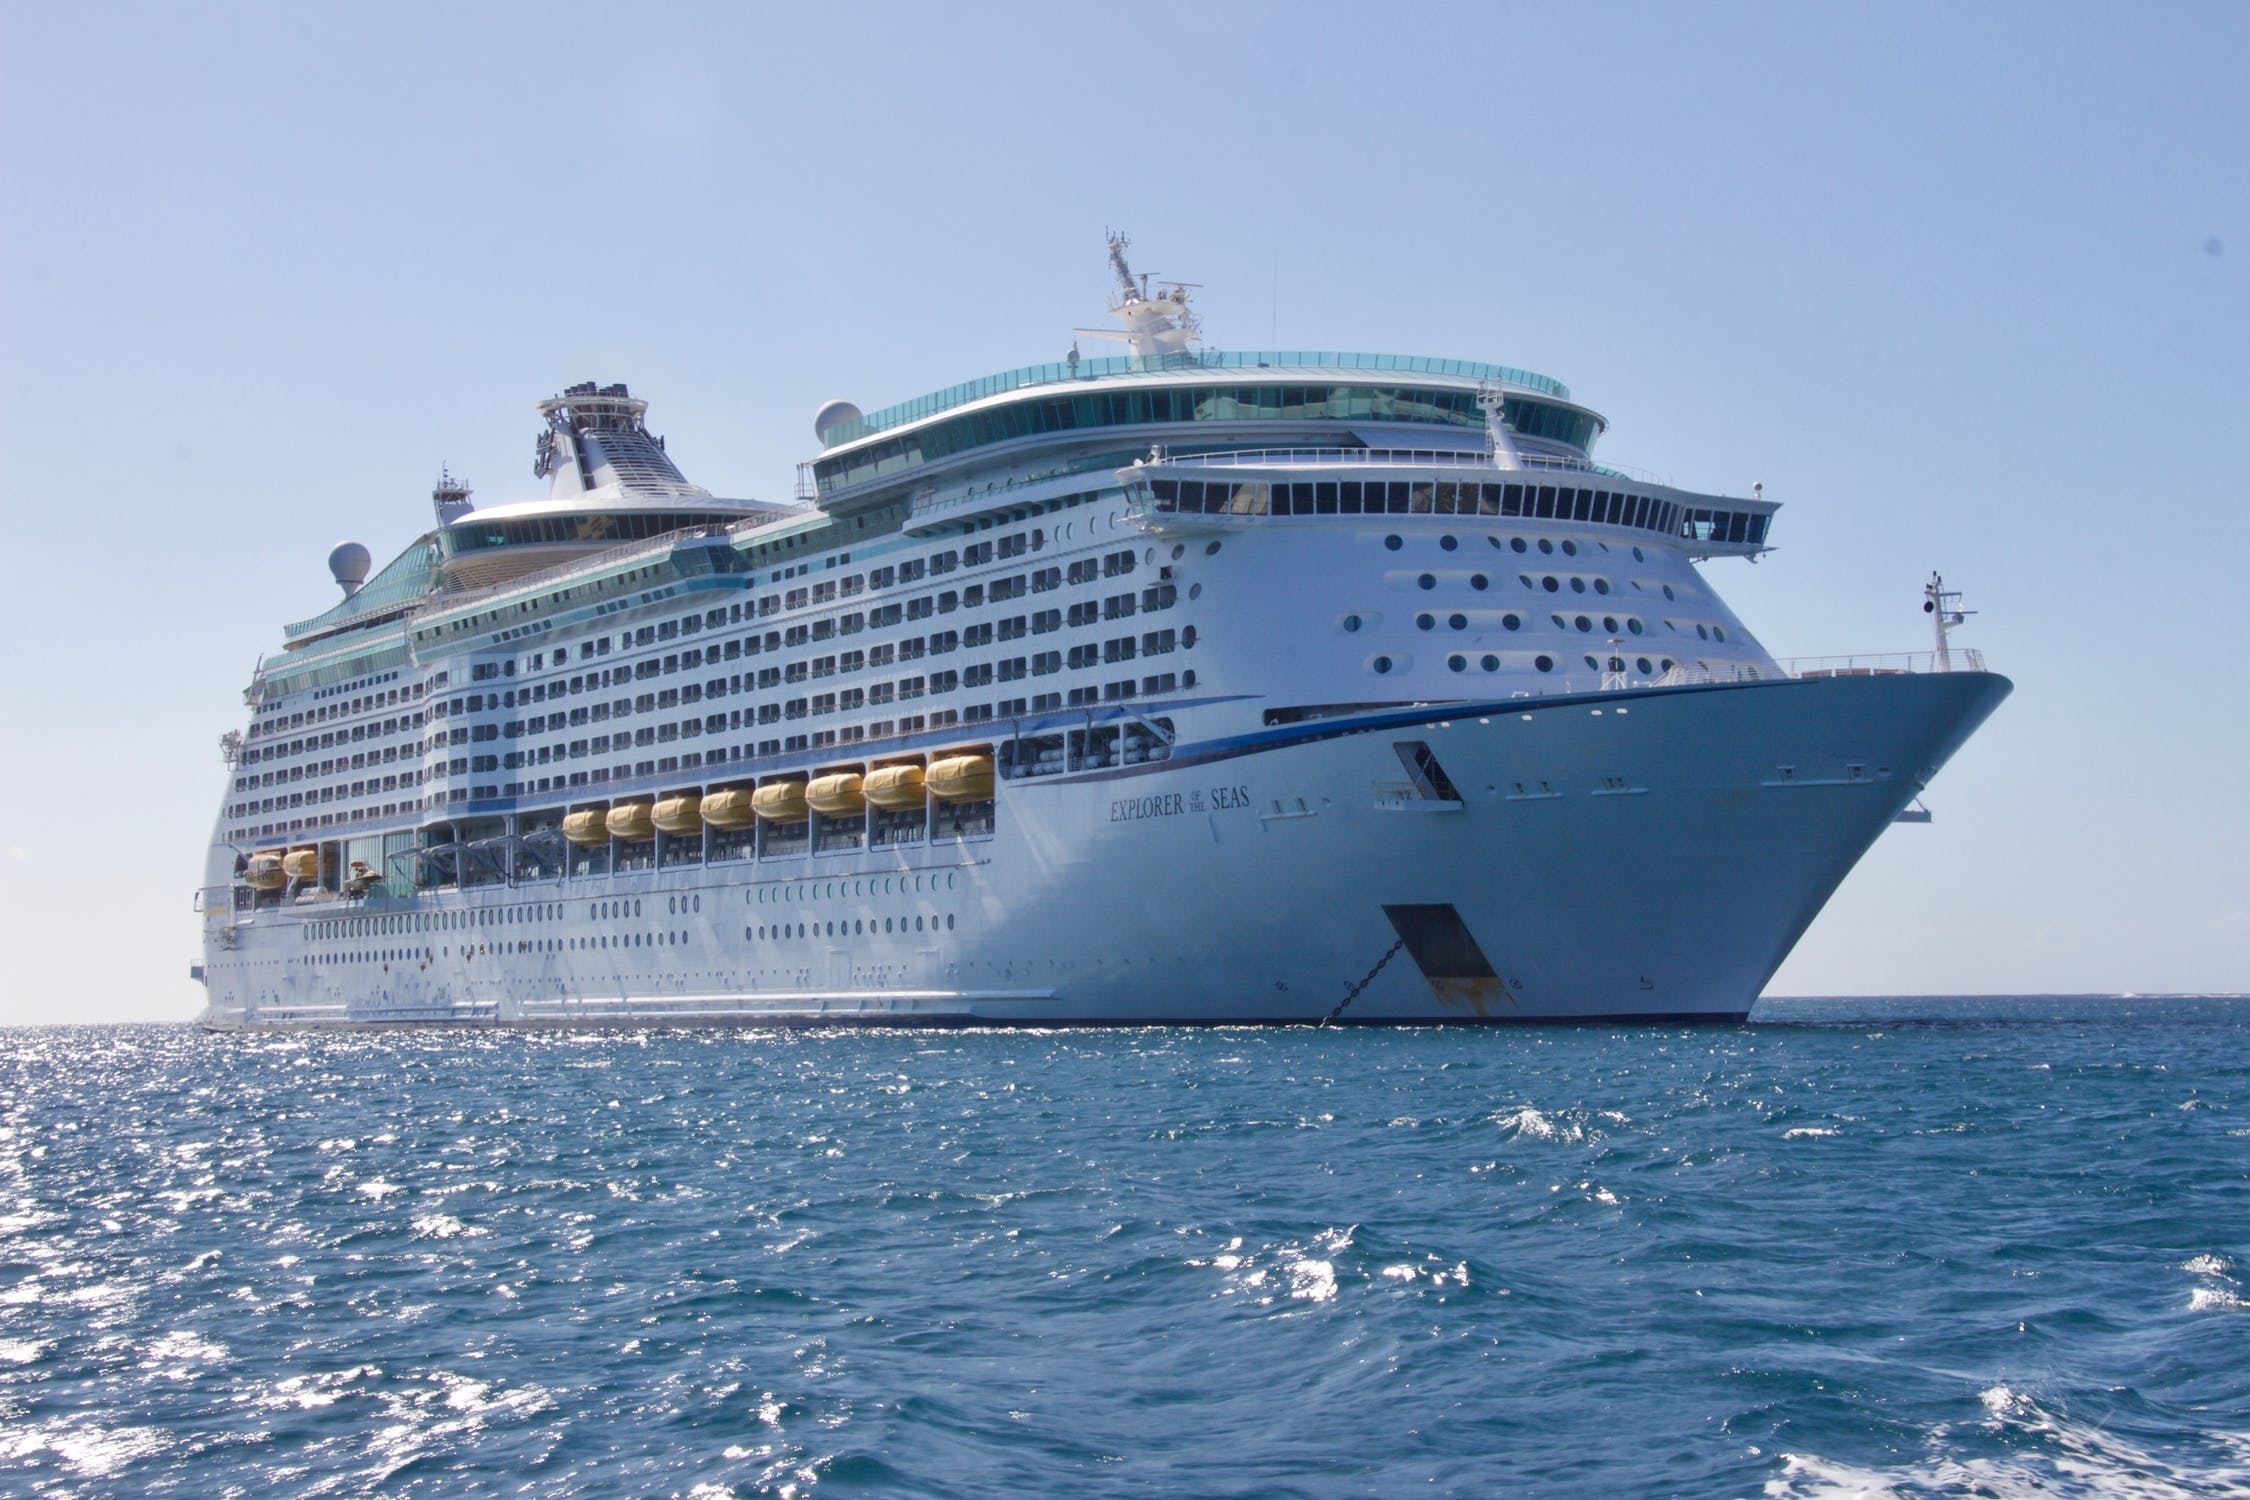 a large cruise ship at sea